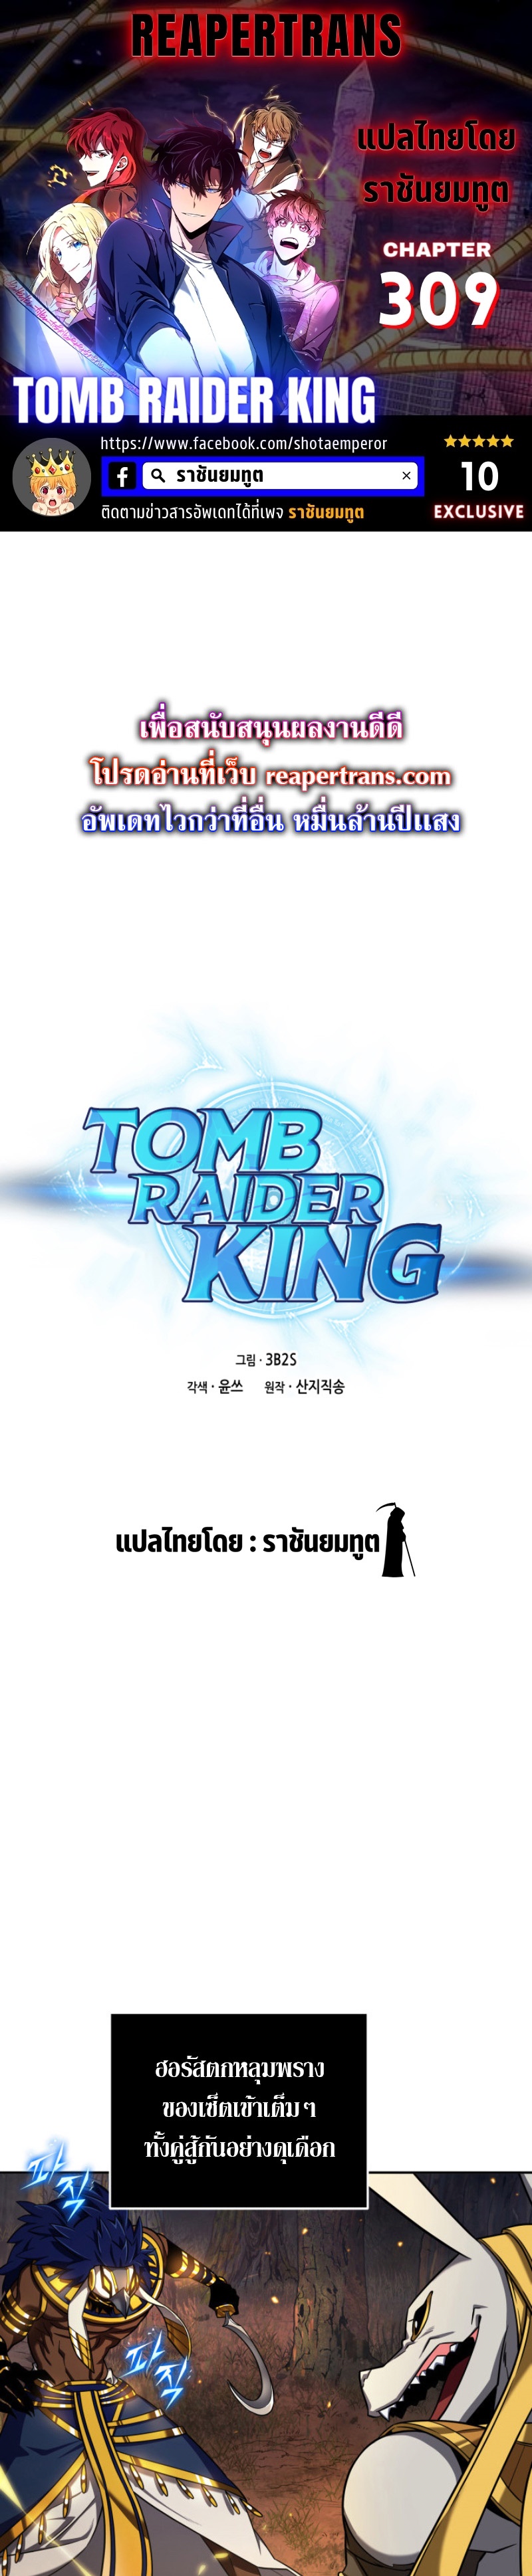 tomb raider king 309.01